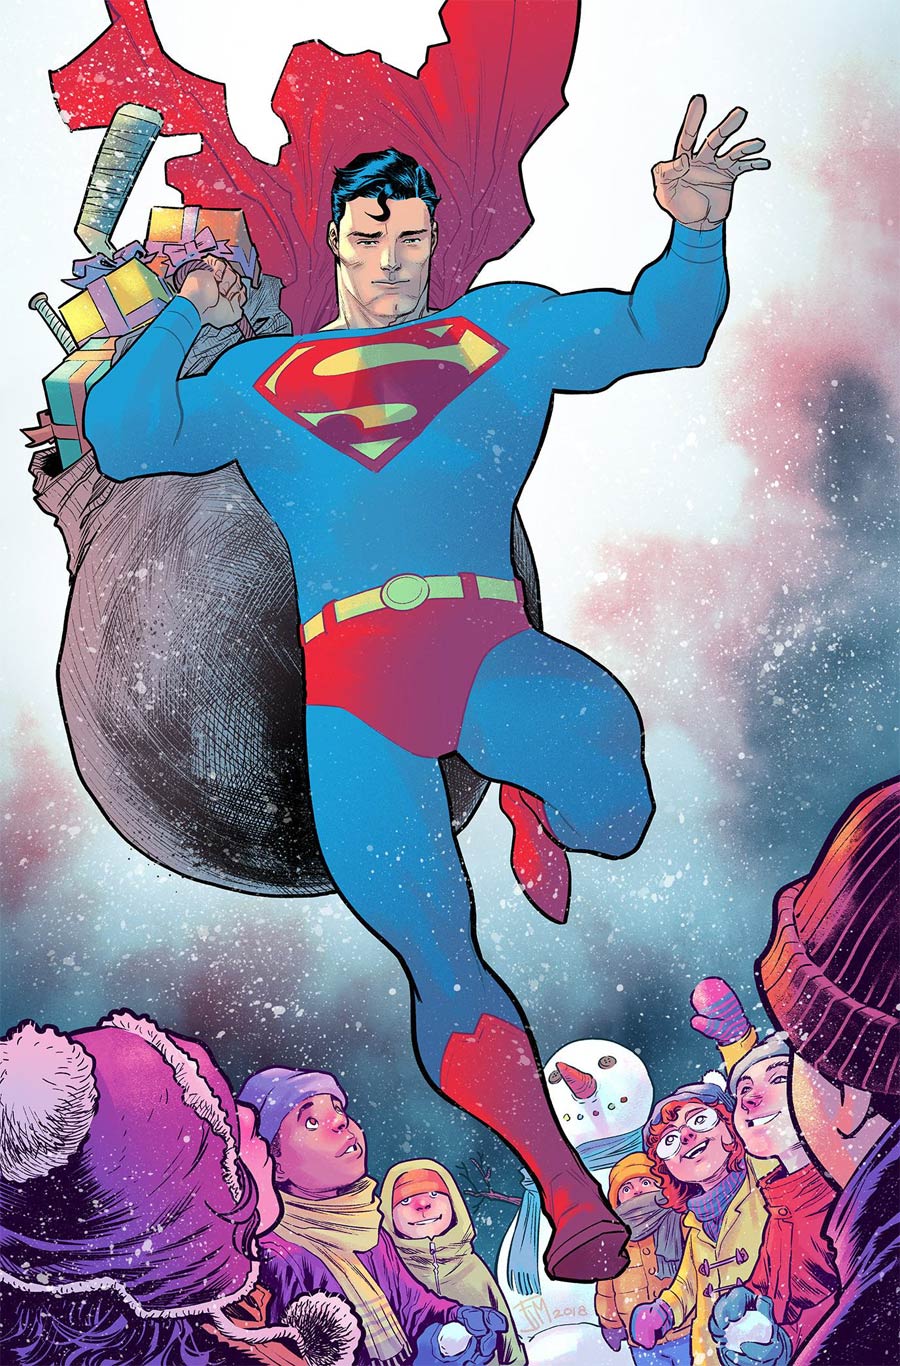 Undercover: Superman subs for Santa as Noe-El, Last Elf of Krypton, in Manapul's 'Action' variant